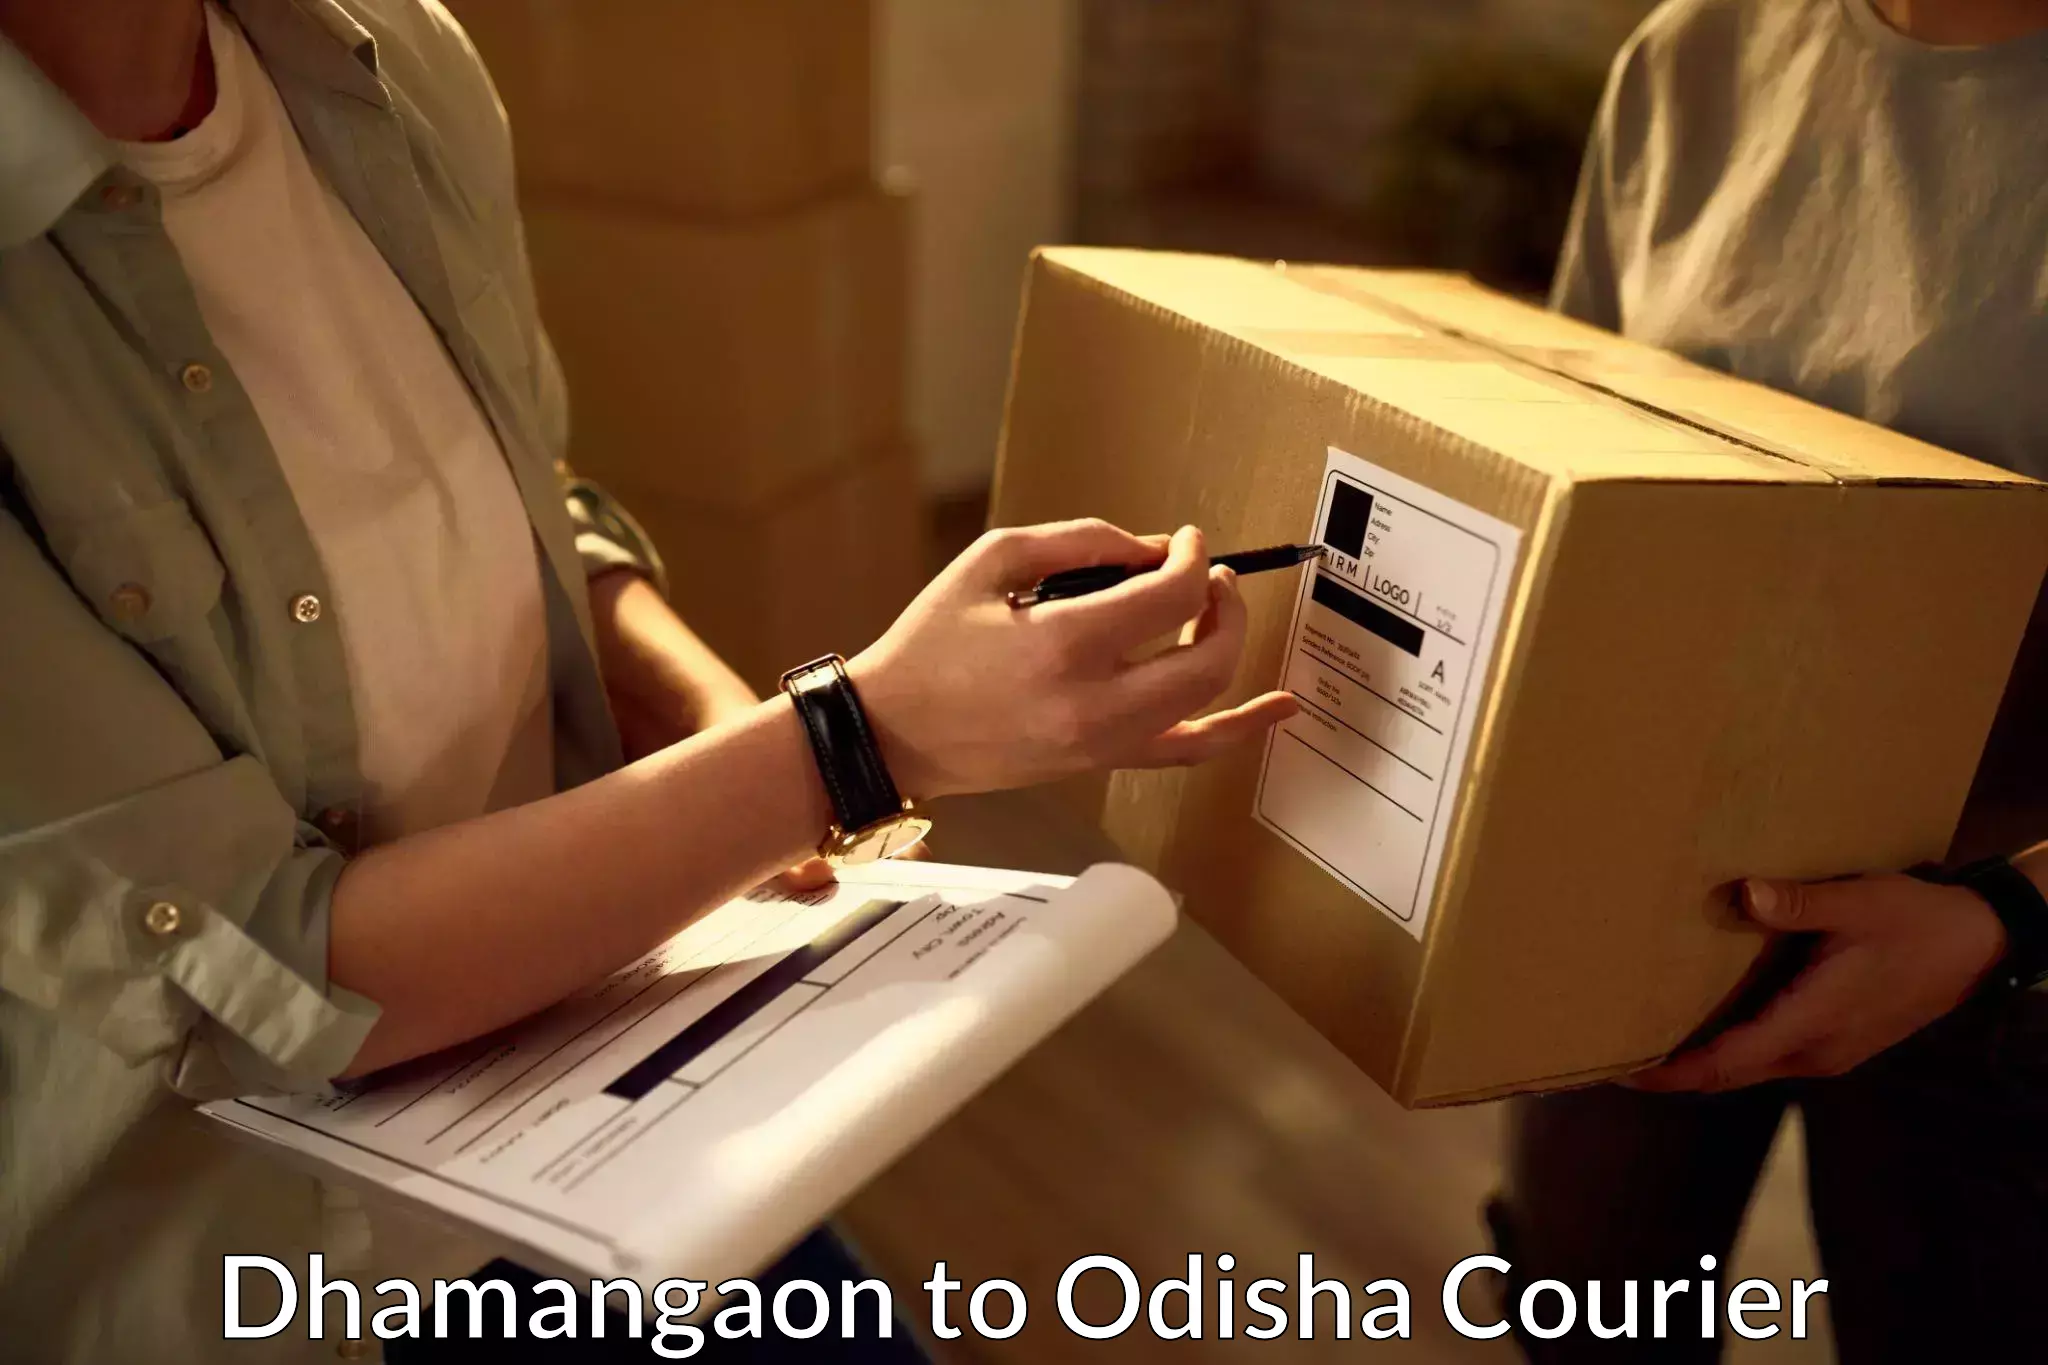 Courier service comparison Dhamangaon to Odisha